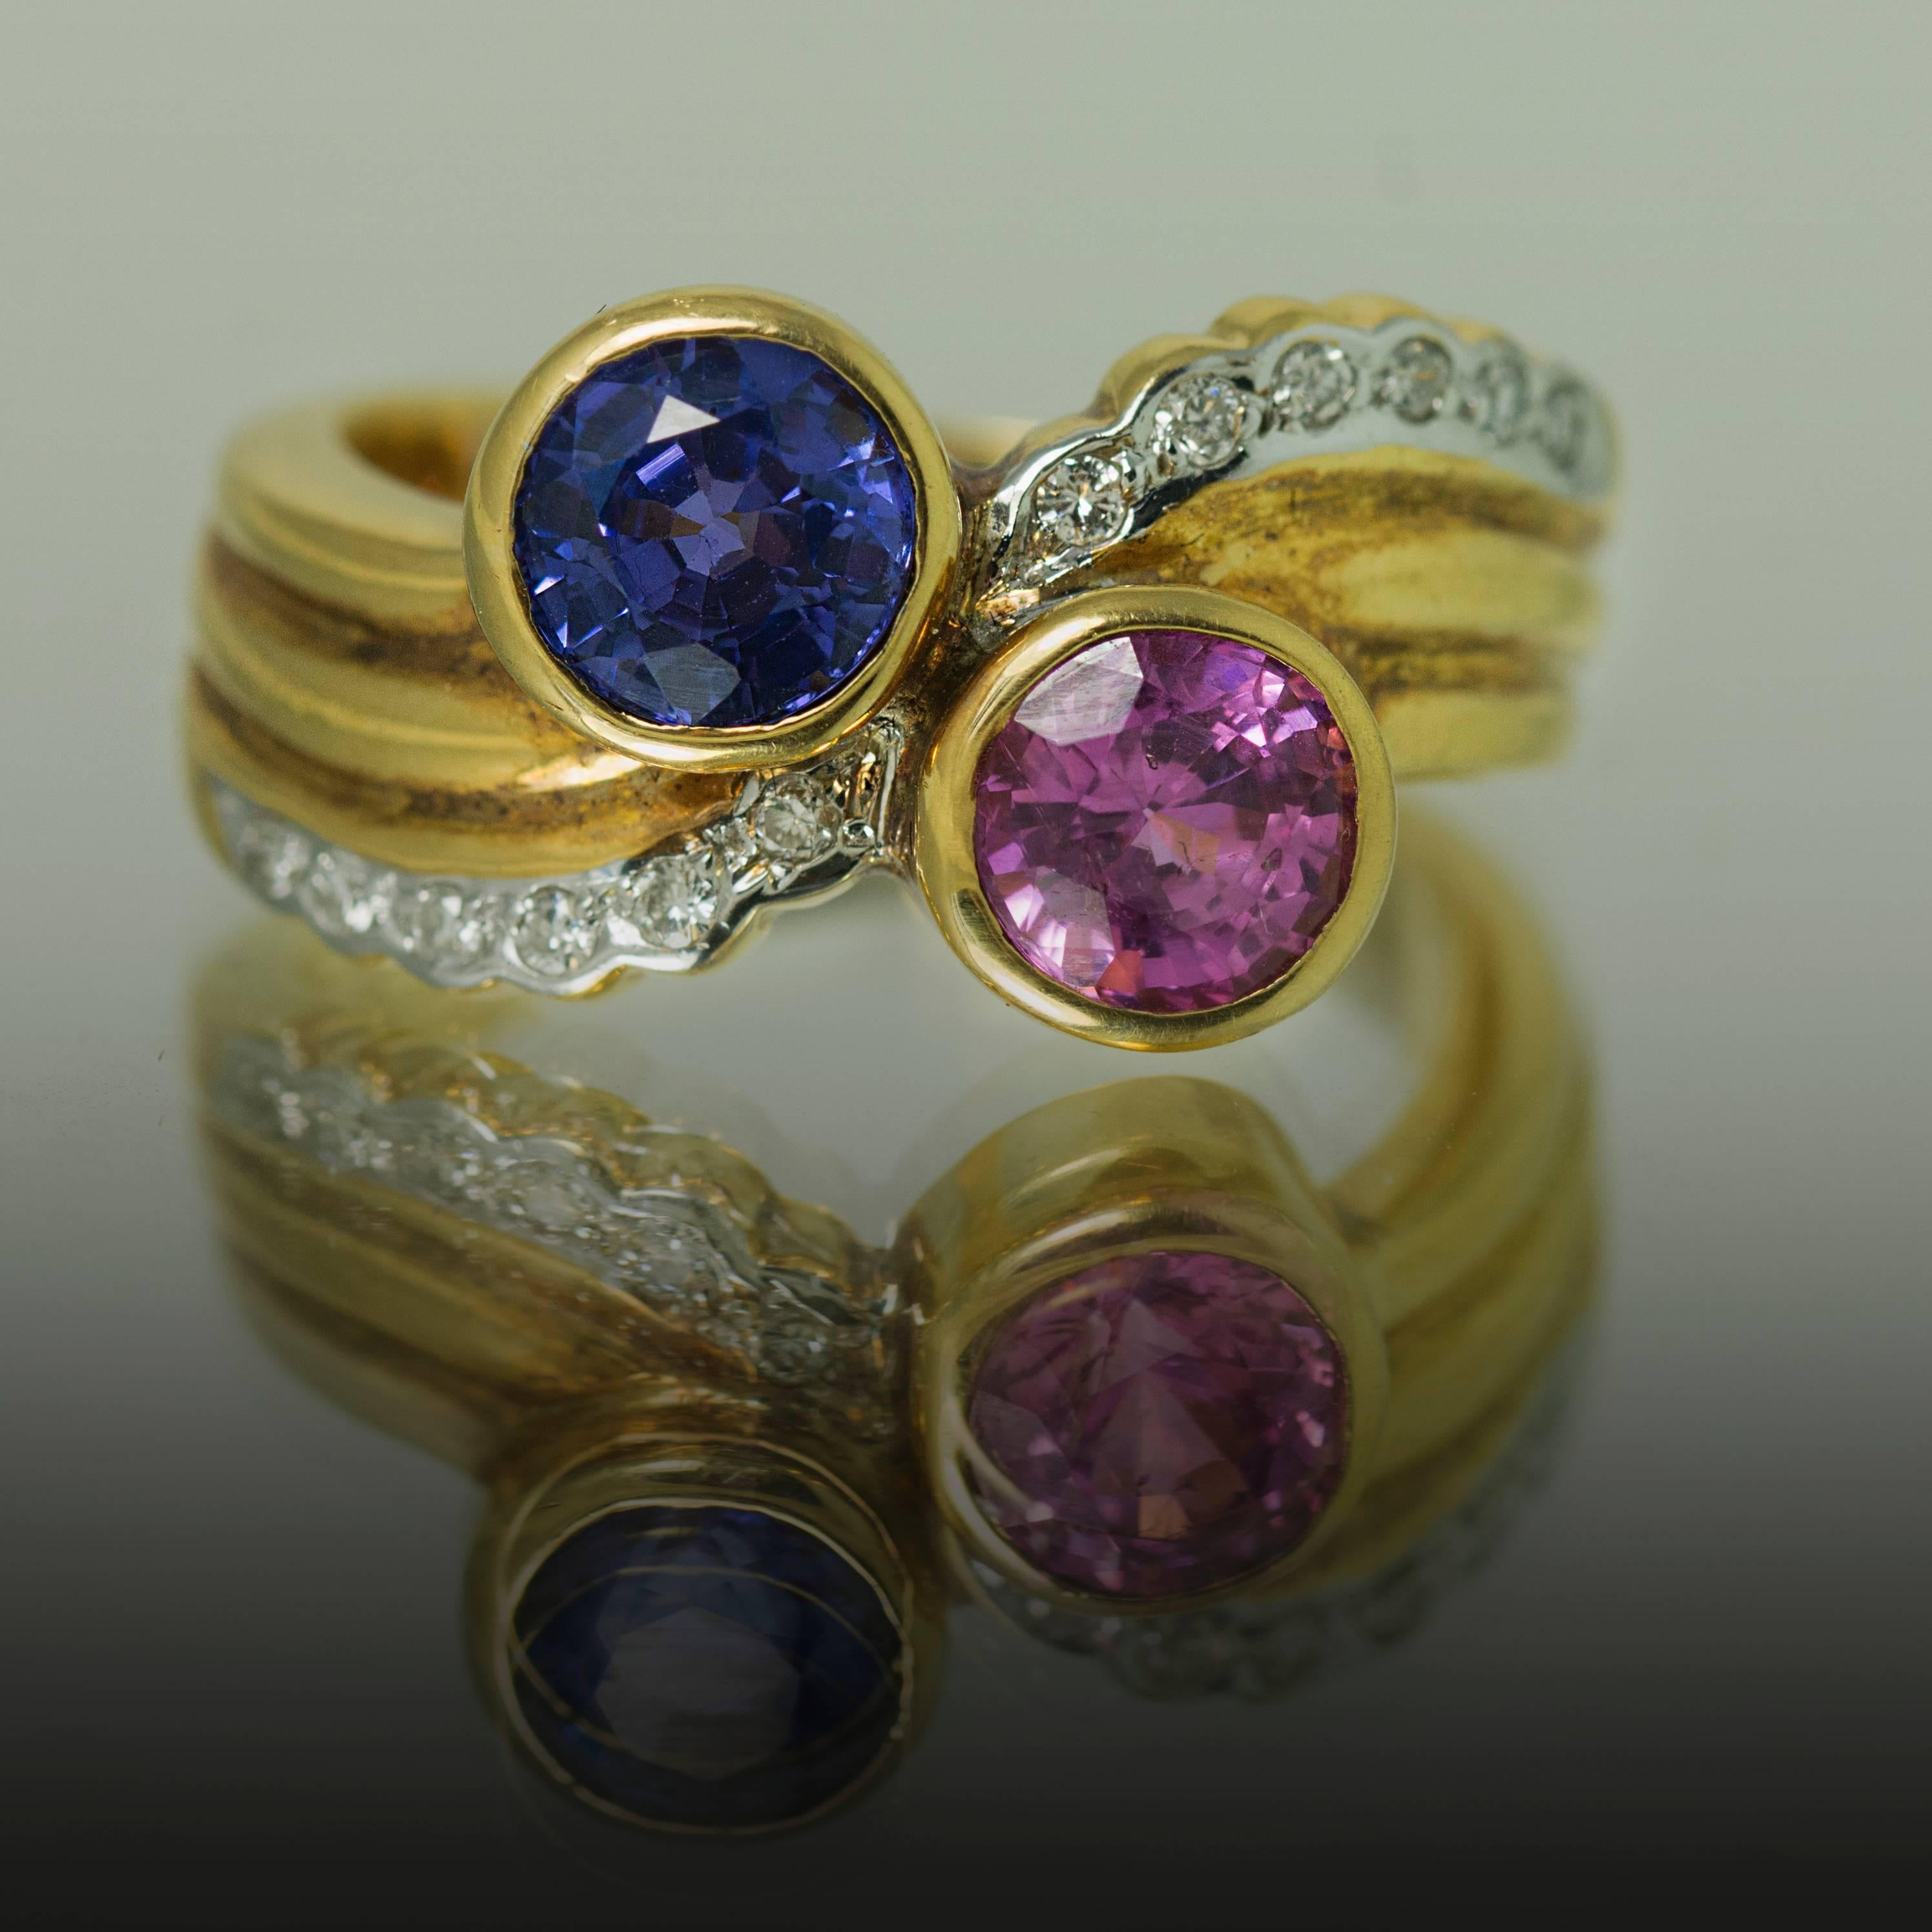 18k Sapphire Ring with 1 round blue sapphire weighing 1.25 carats, 1 round pink sapphire weighing 1.13 carat and 12 round diamonds = 0.25